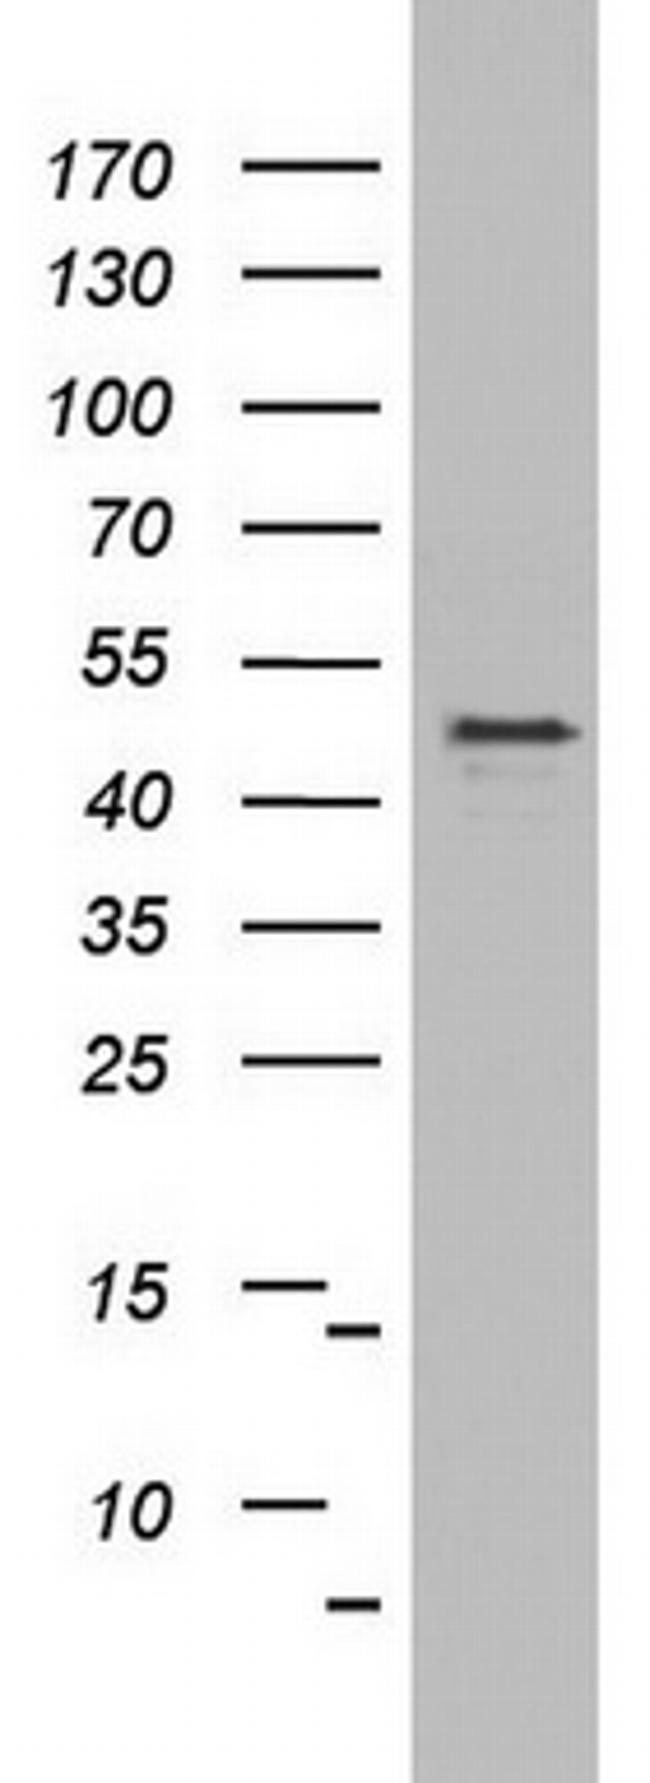 OXSM Antibody in Western Blot (WB)